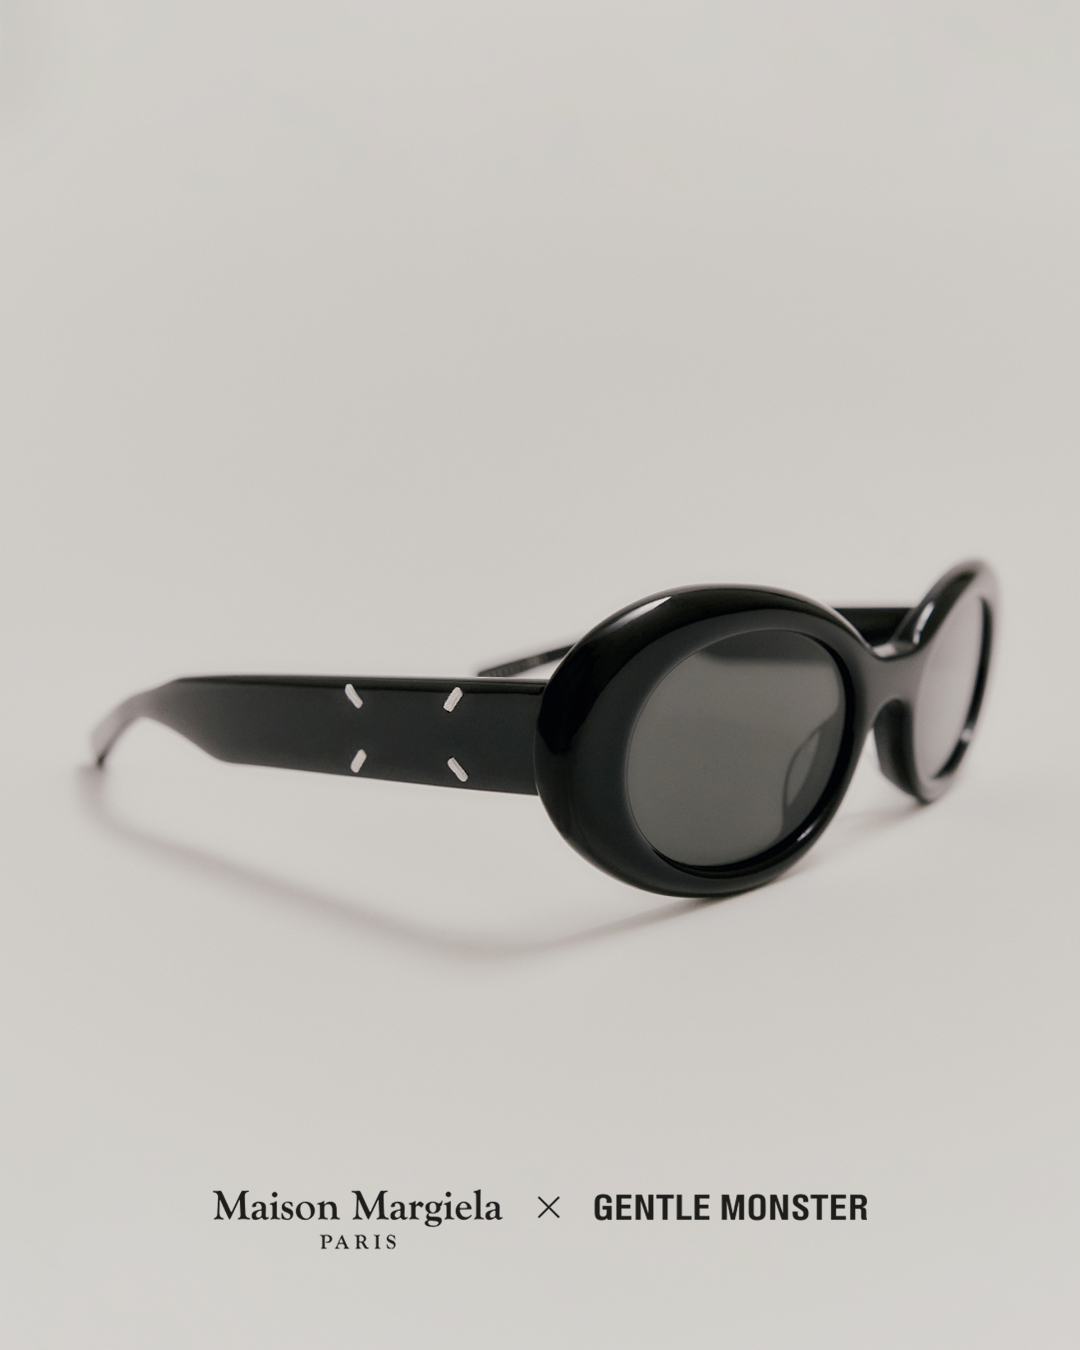 Maison MargielaとGENTLE MONSTERによるコラボレーションアイウェアが2 